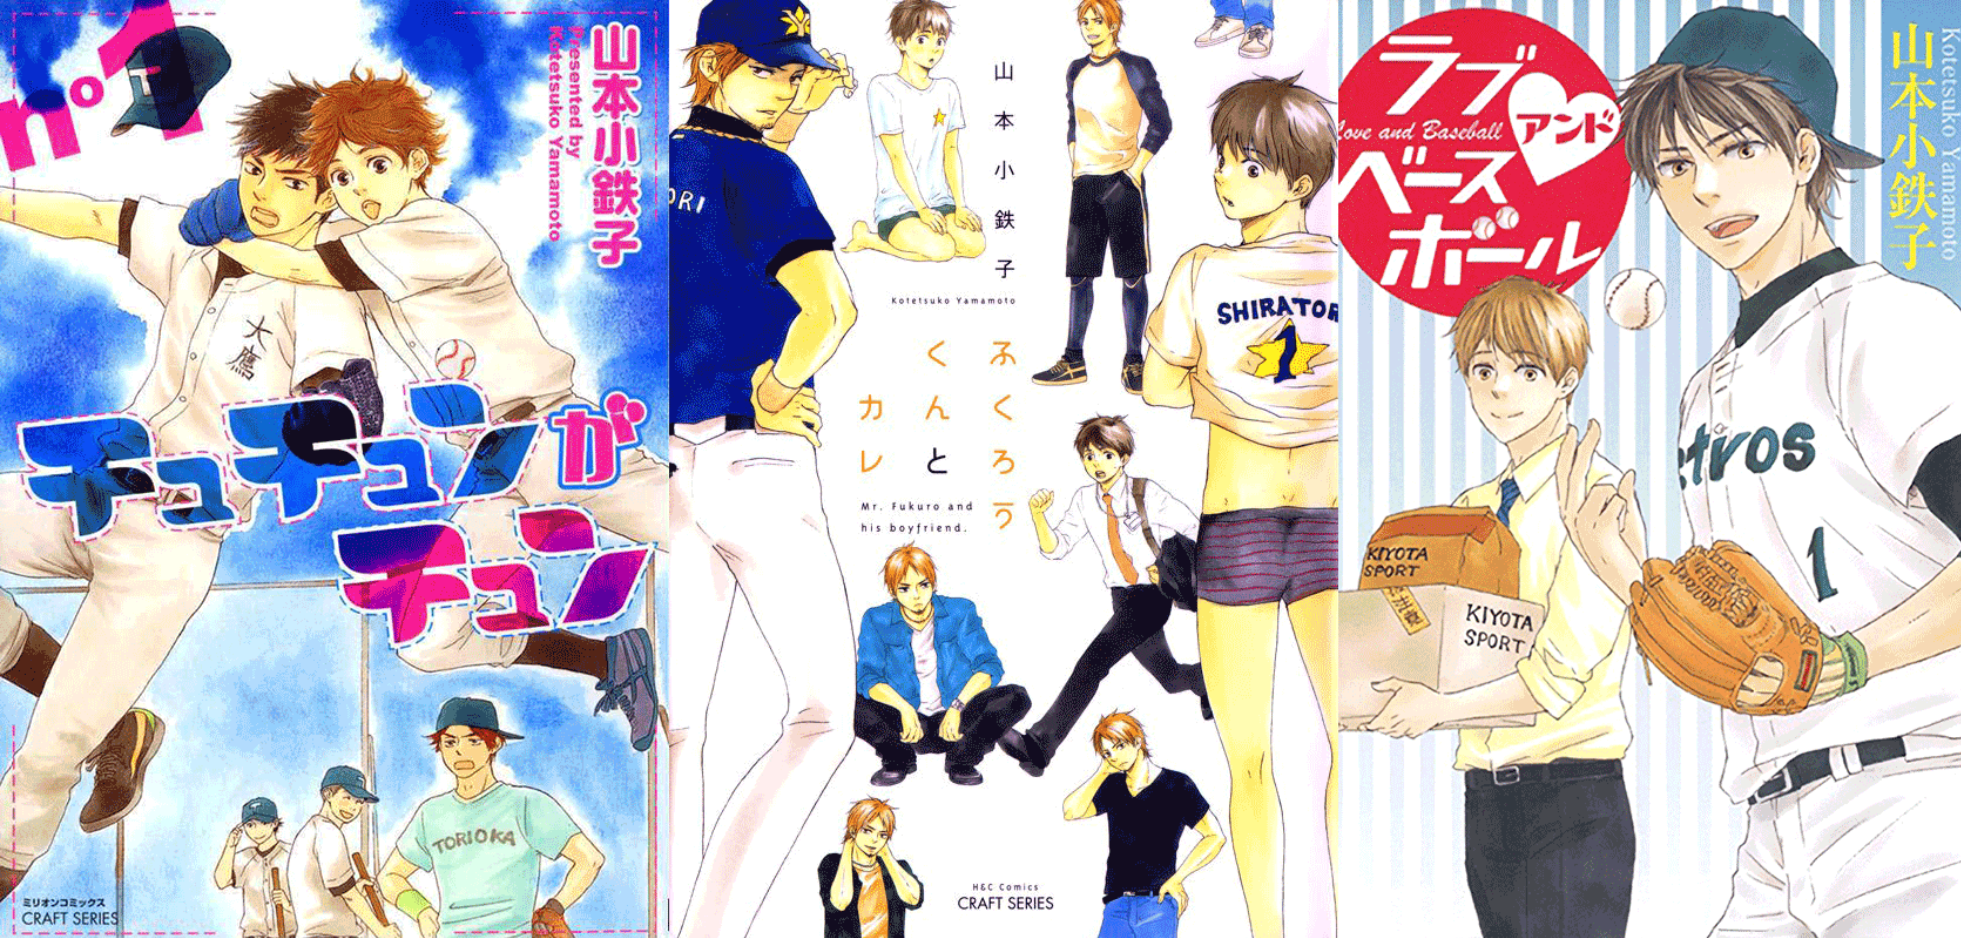 Edited image showing three manga covers for the following titles: Chuchun ga Chun [Vol.1], Fukurou-kun to Kare, and Love and Baseball.